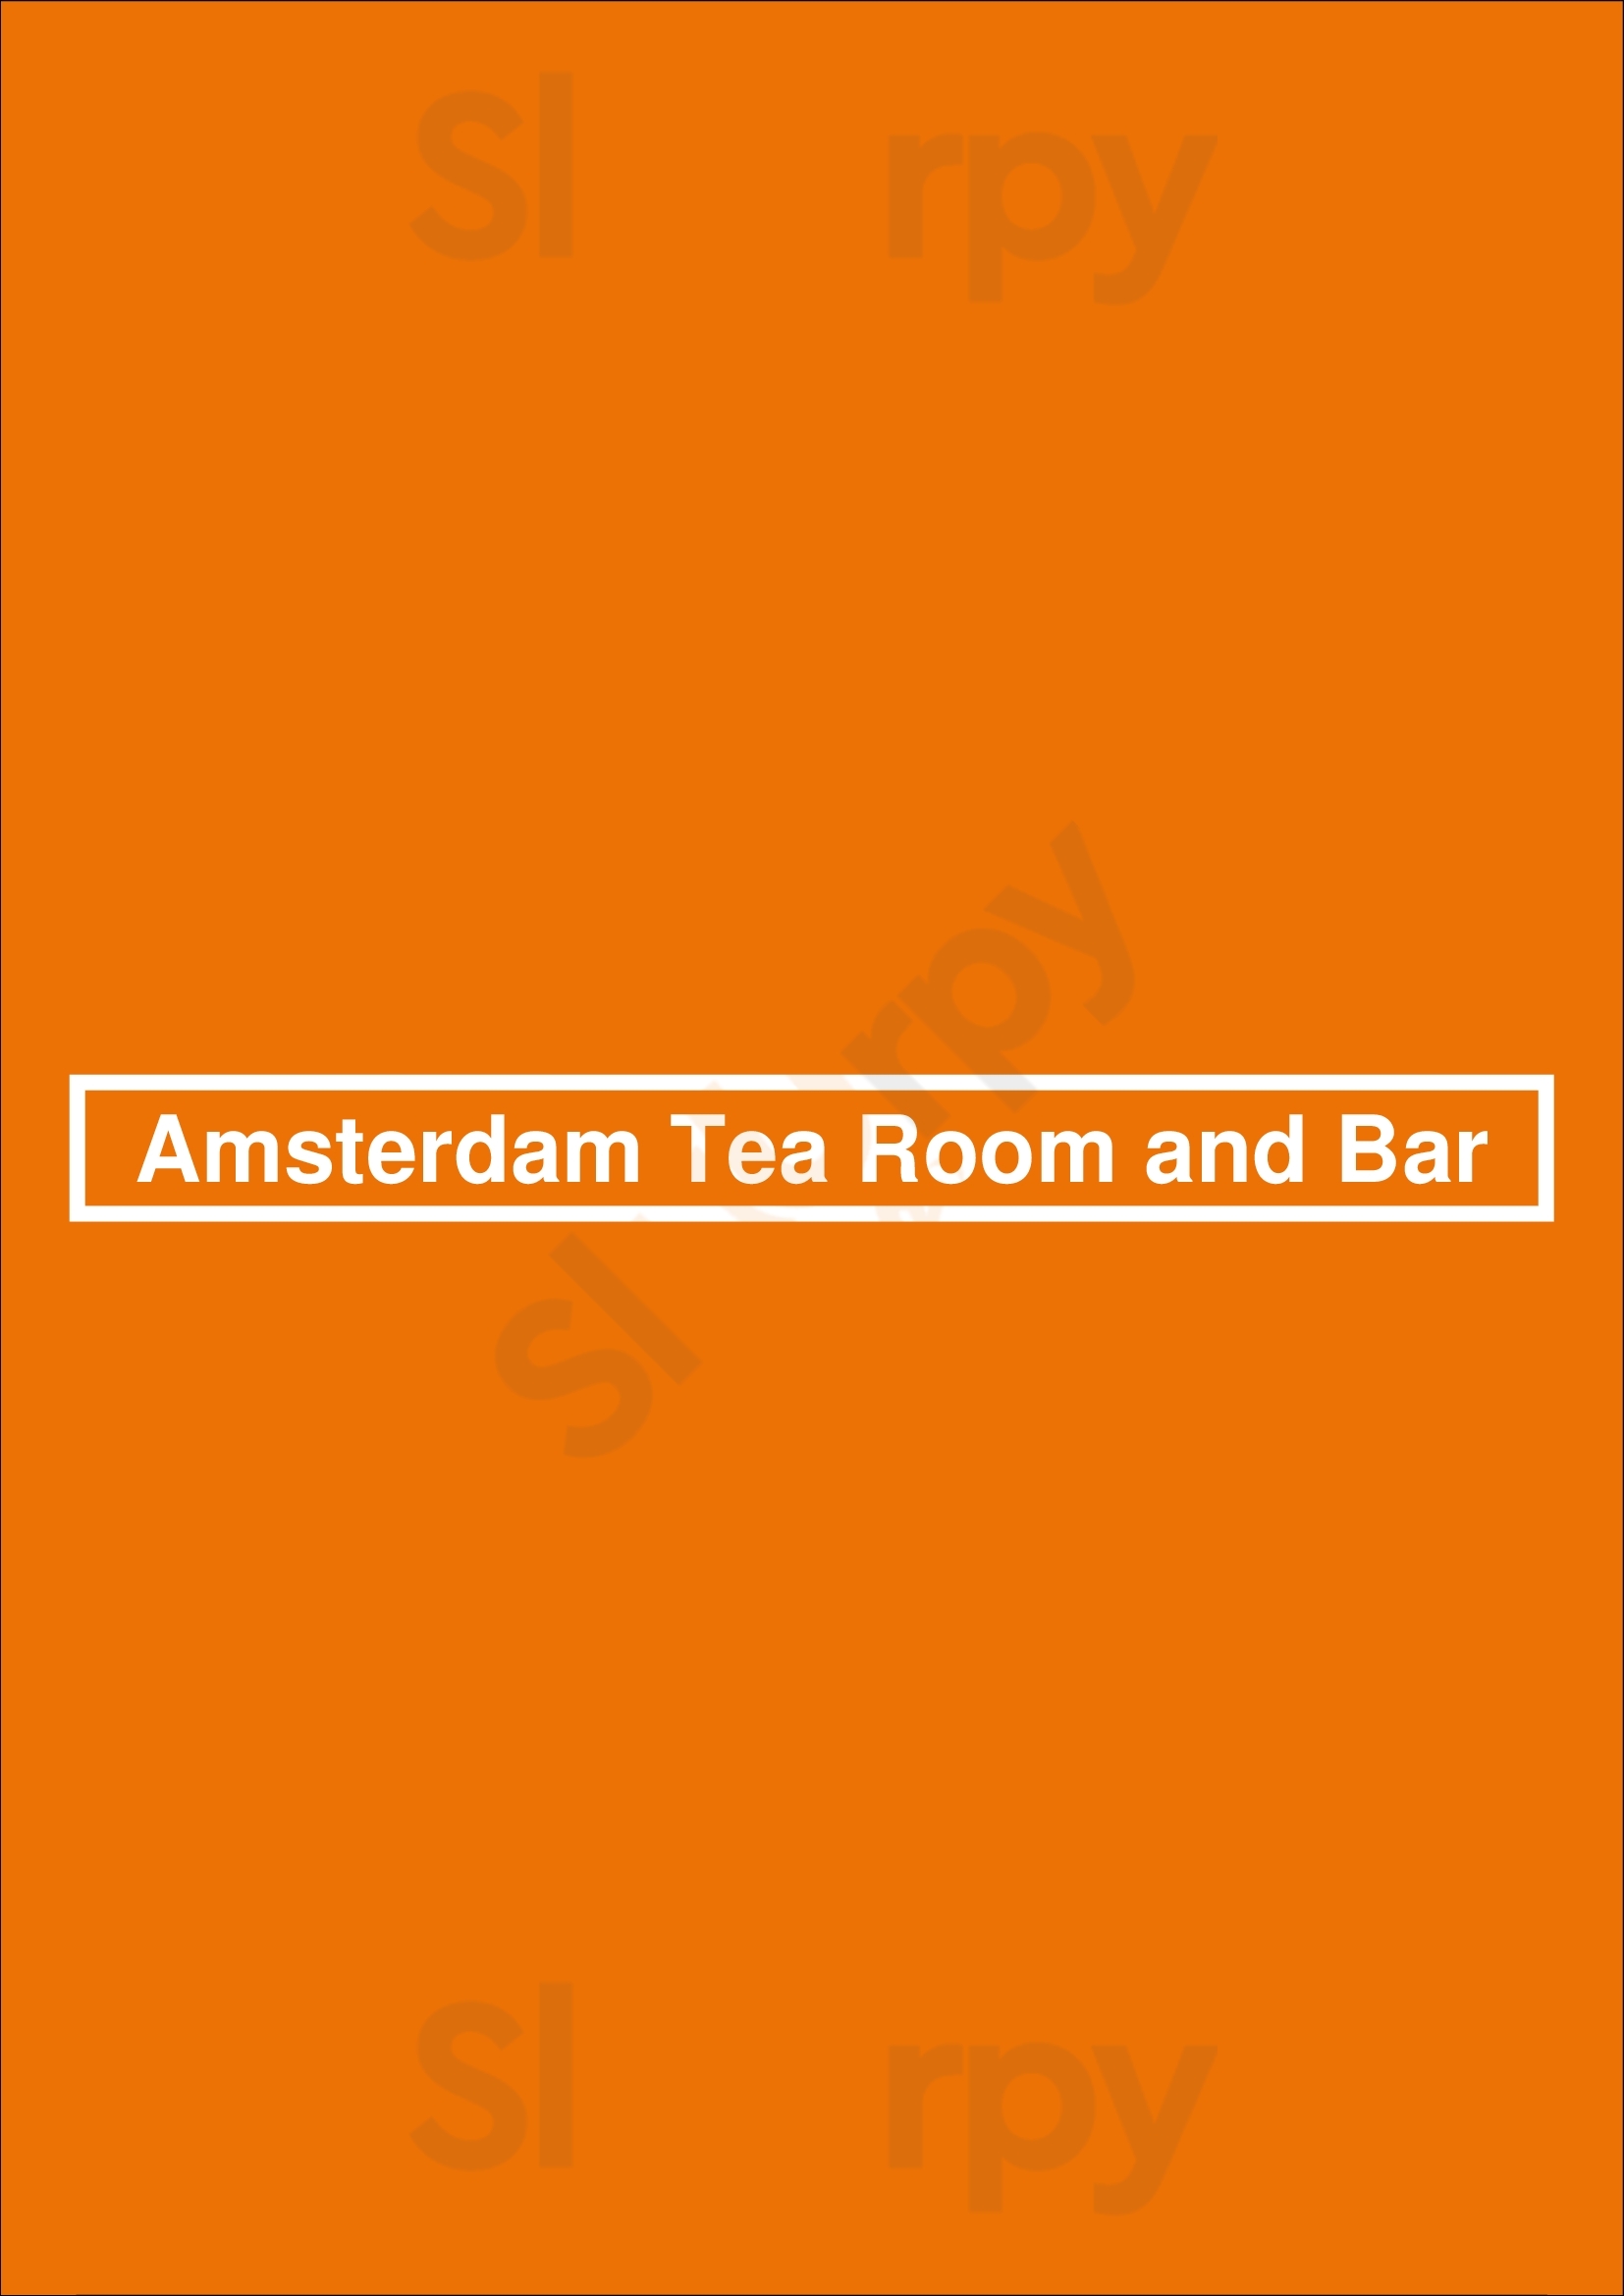 Amsterdam Tea Room And Bar Winnipeg Menu - 1